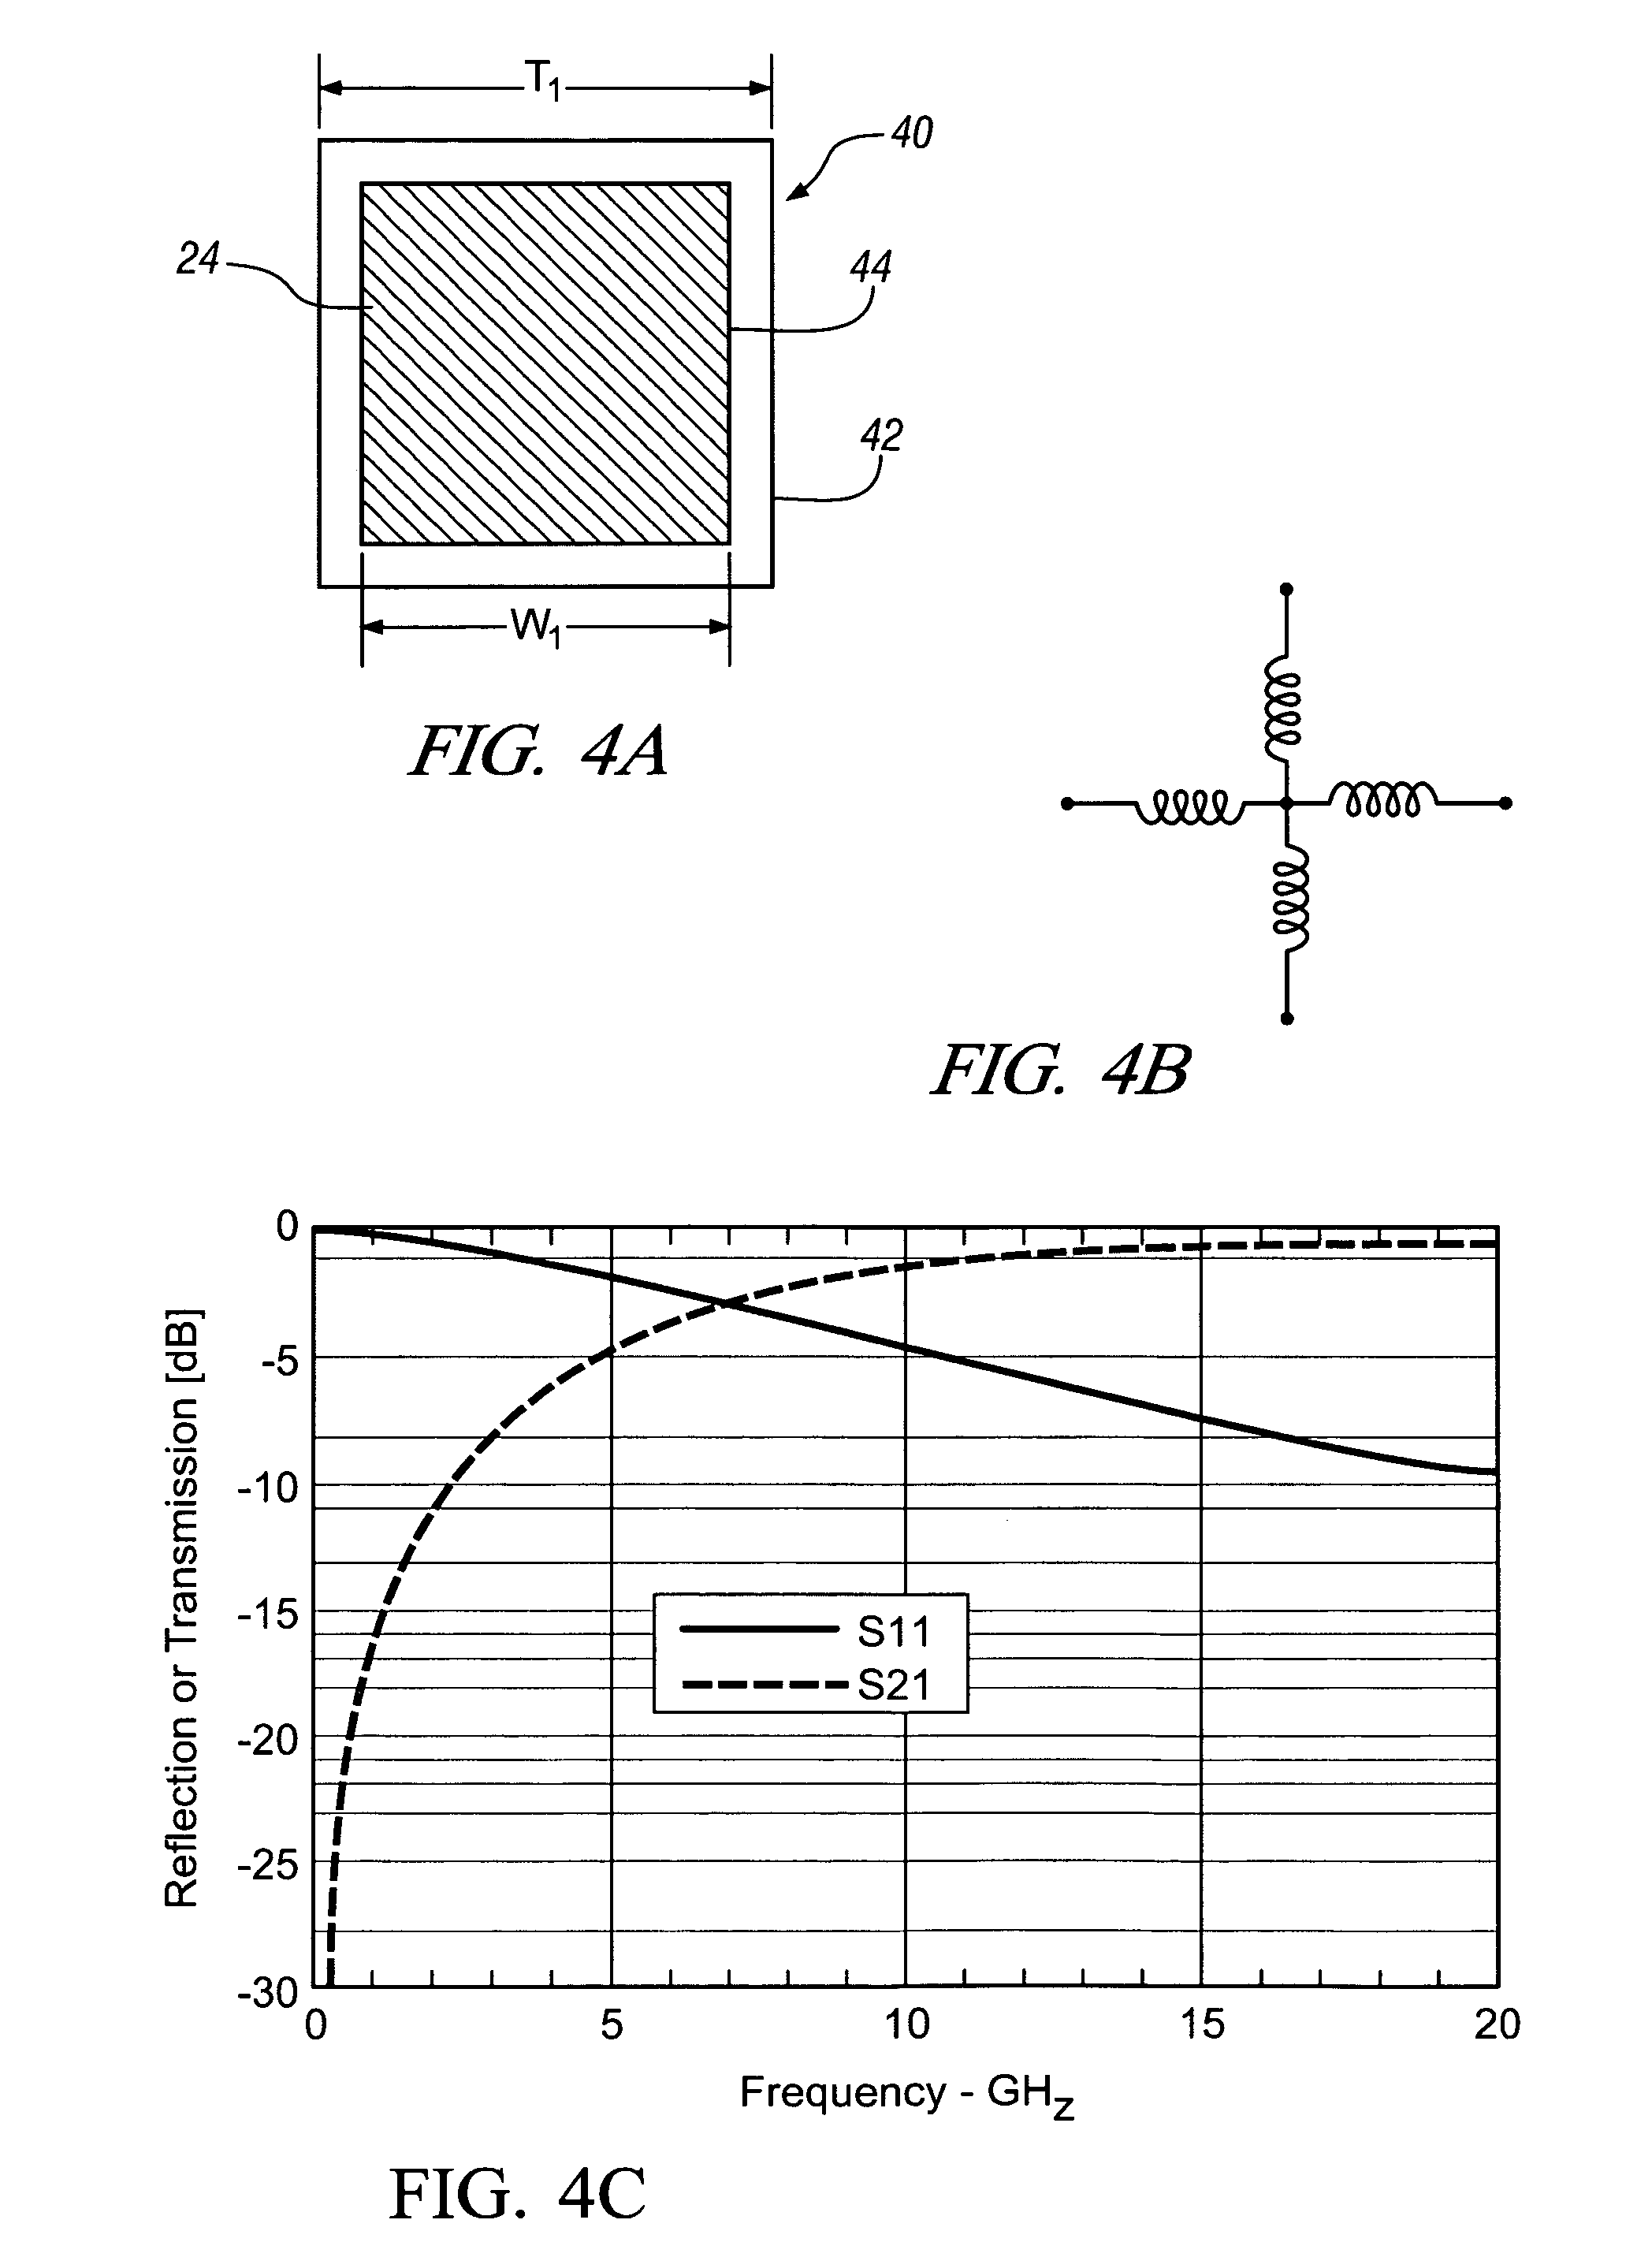 Method for fabricating antenna structures having adjustable radiation characteristics